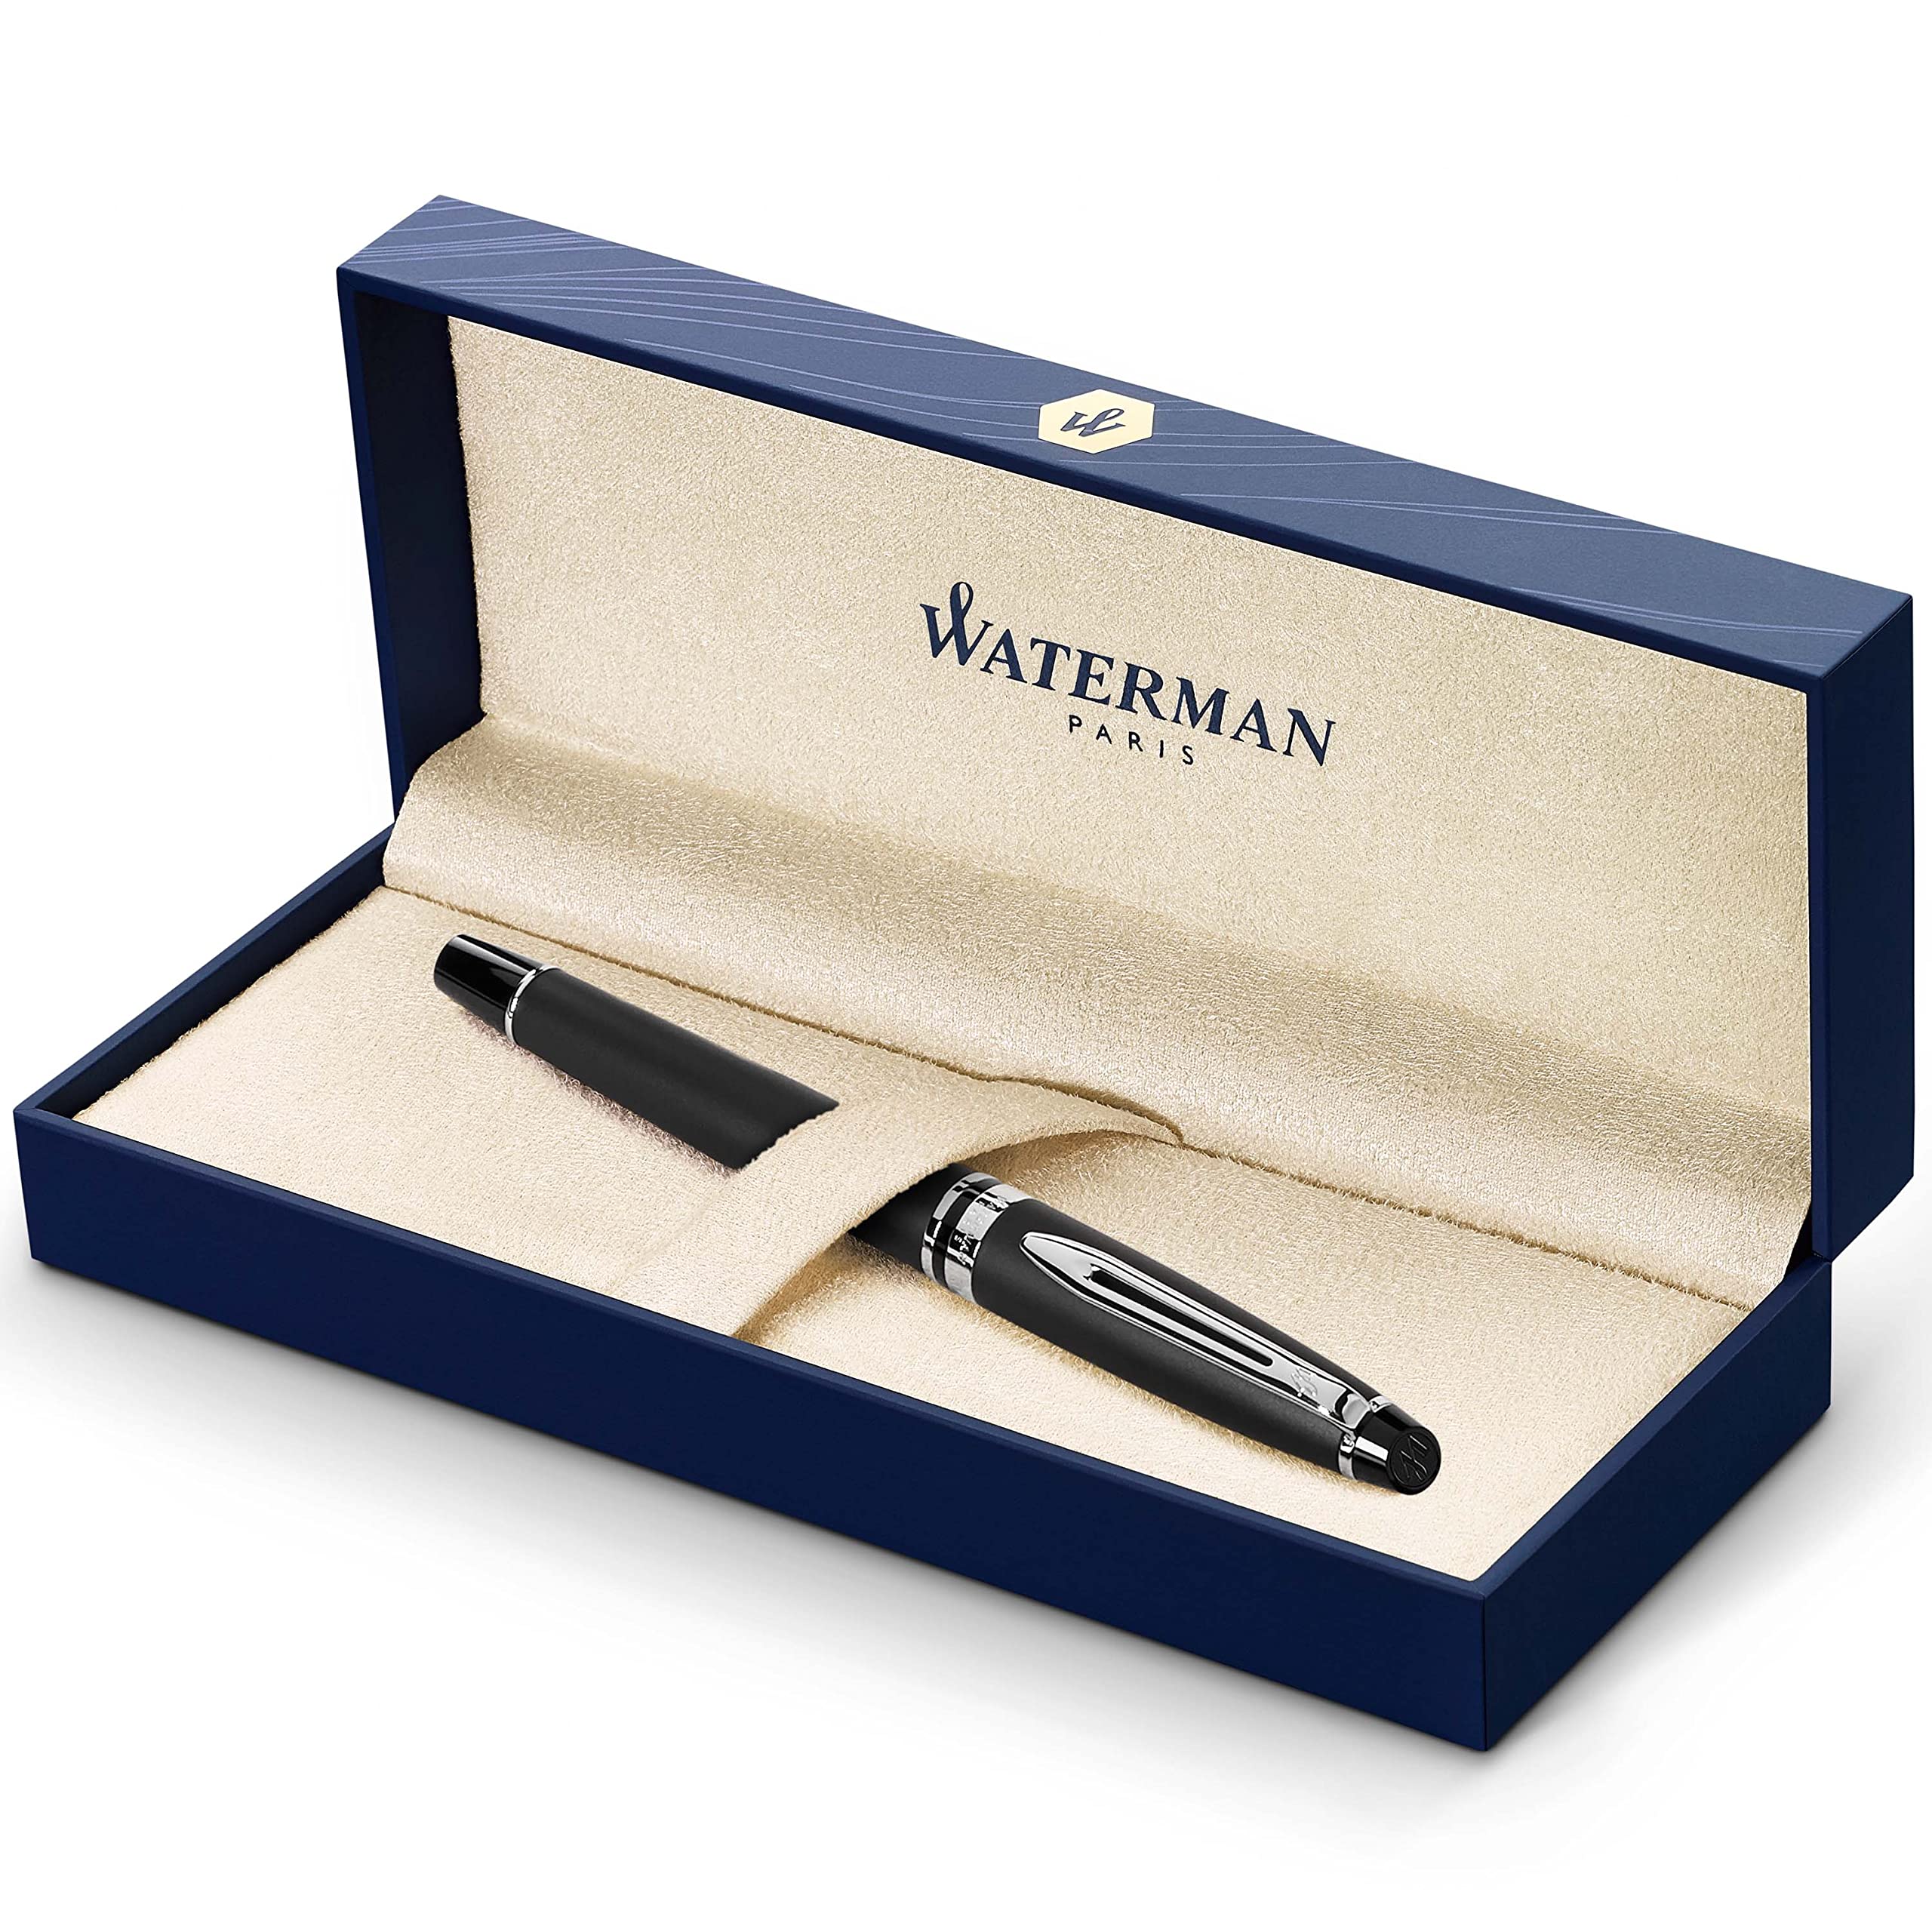 Waterman Expert Fountain Pen - Matte Black/Chrome Trim - Fine Nib with Blue Ink